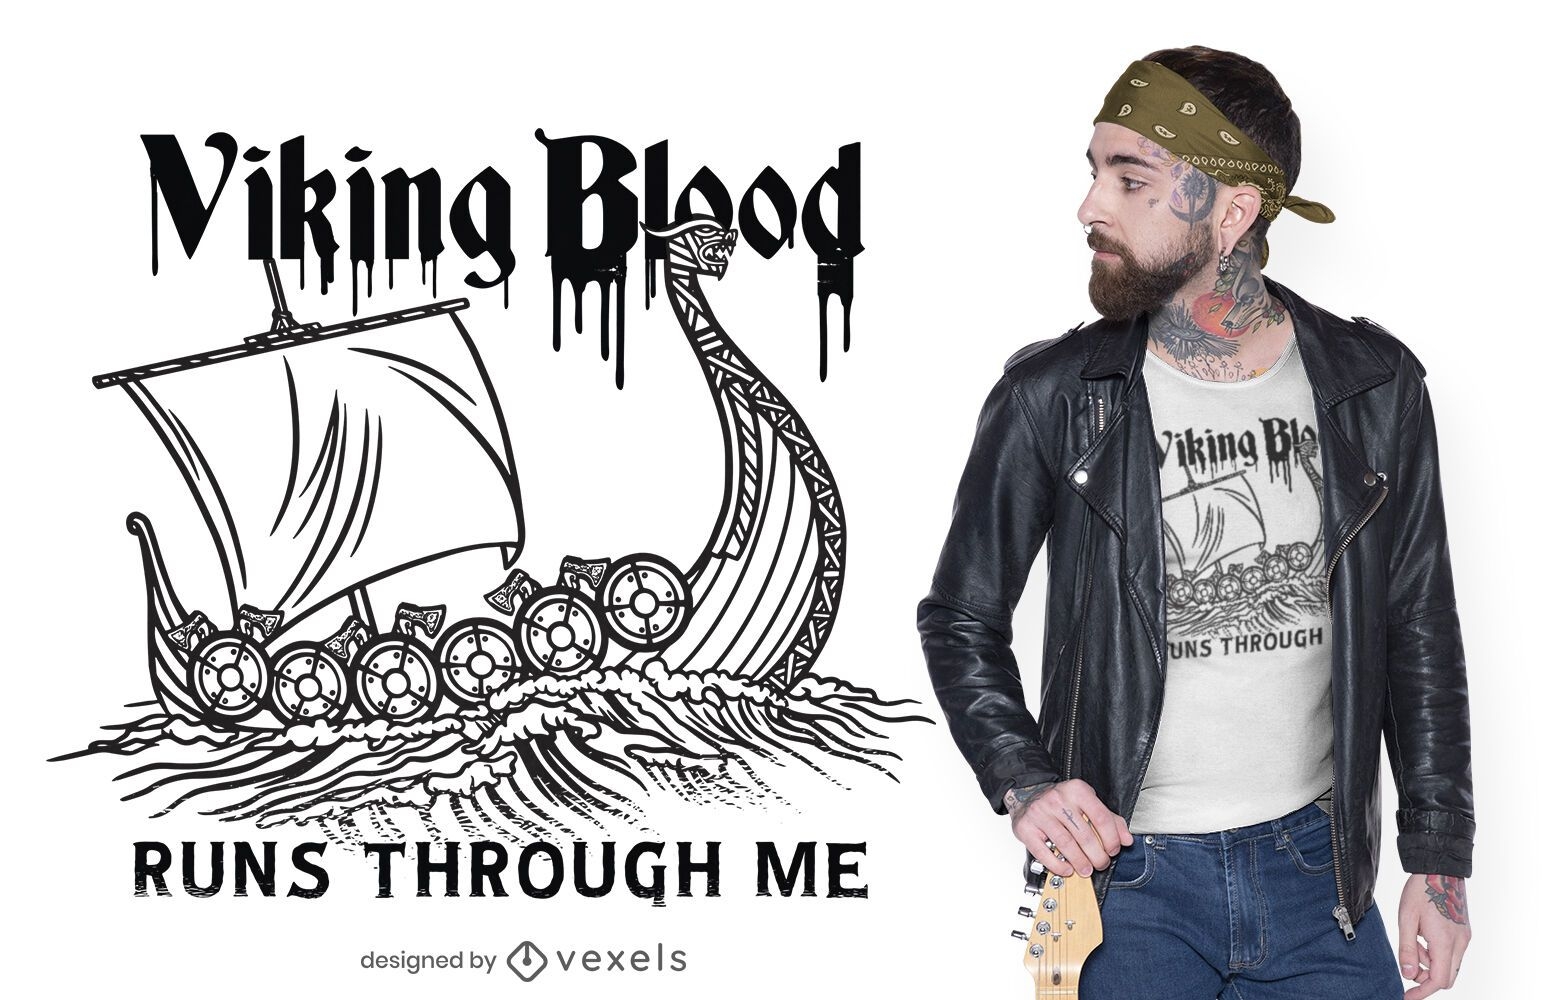 Cita de sangre vikinga y diseño de camiseta de barco.